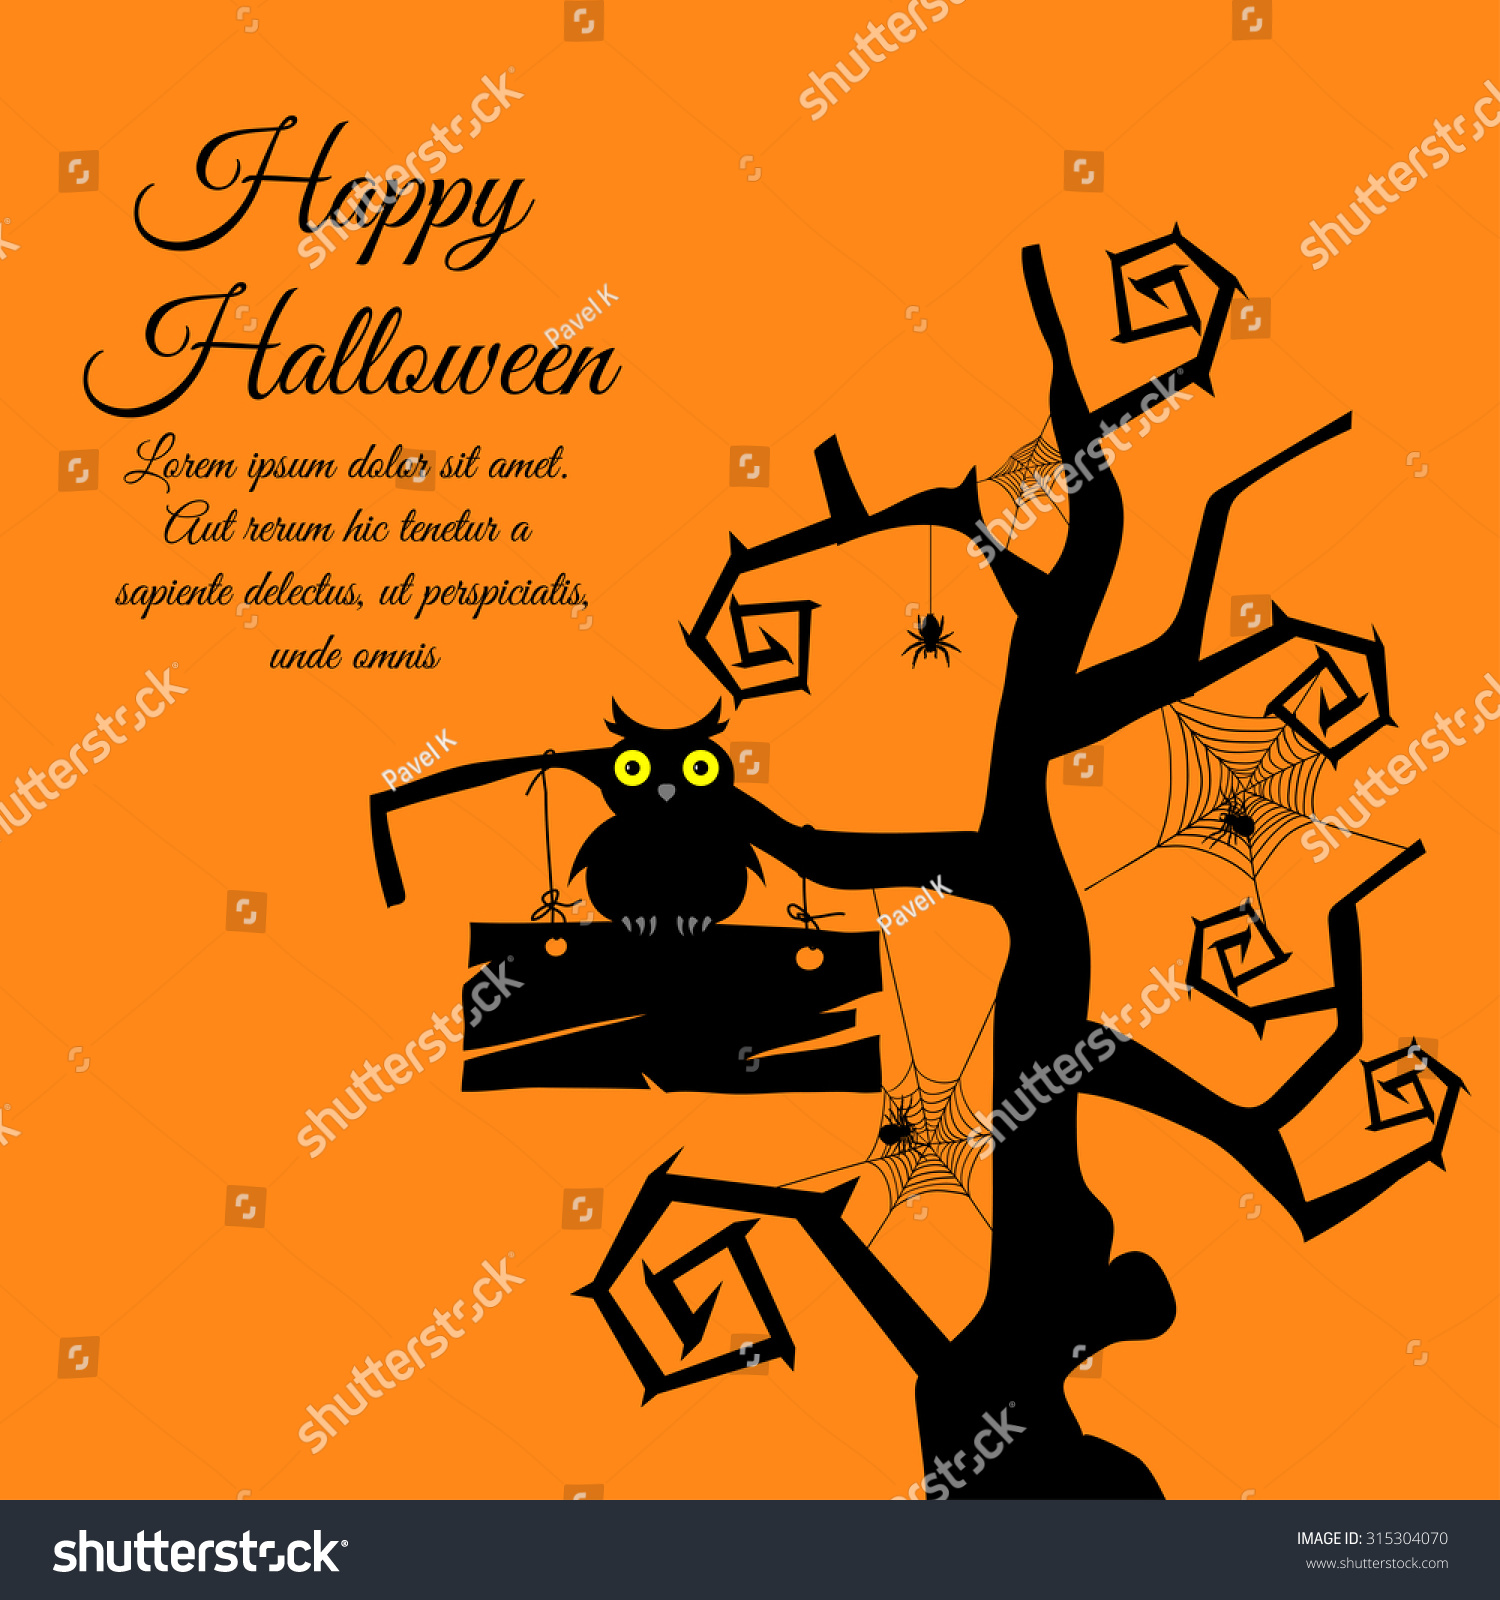 Happy Halloween Greeting Card. Elegant Design With Gothic ...